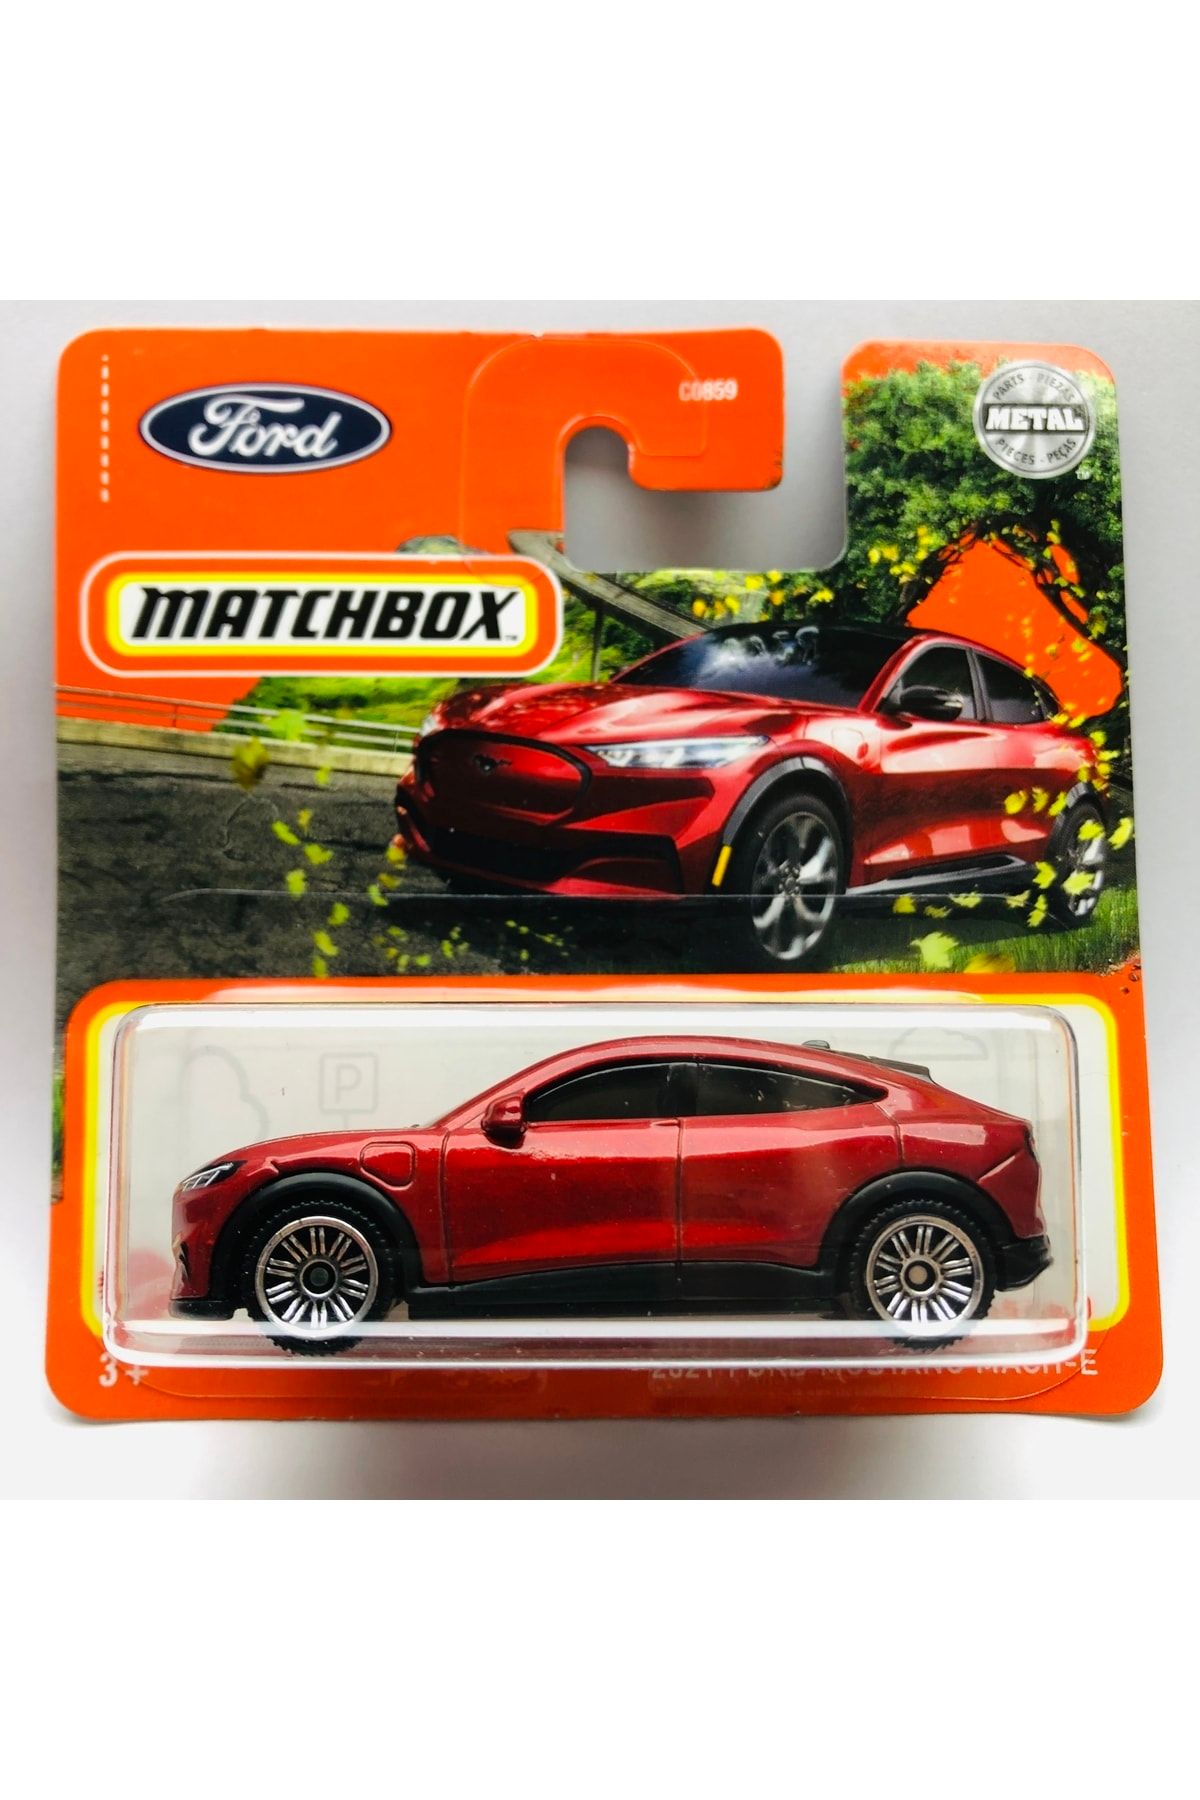 Matchbox جدید - 2021 F0rd Mustang Mach-e Red Mini Car 1:64 Scale Brand 65/100